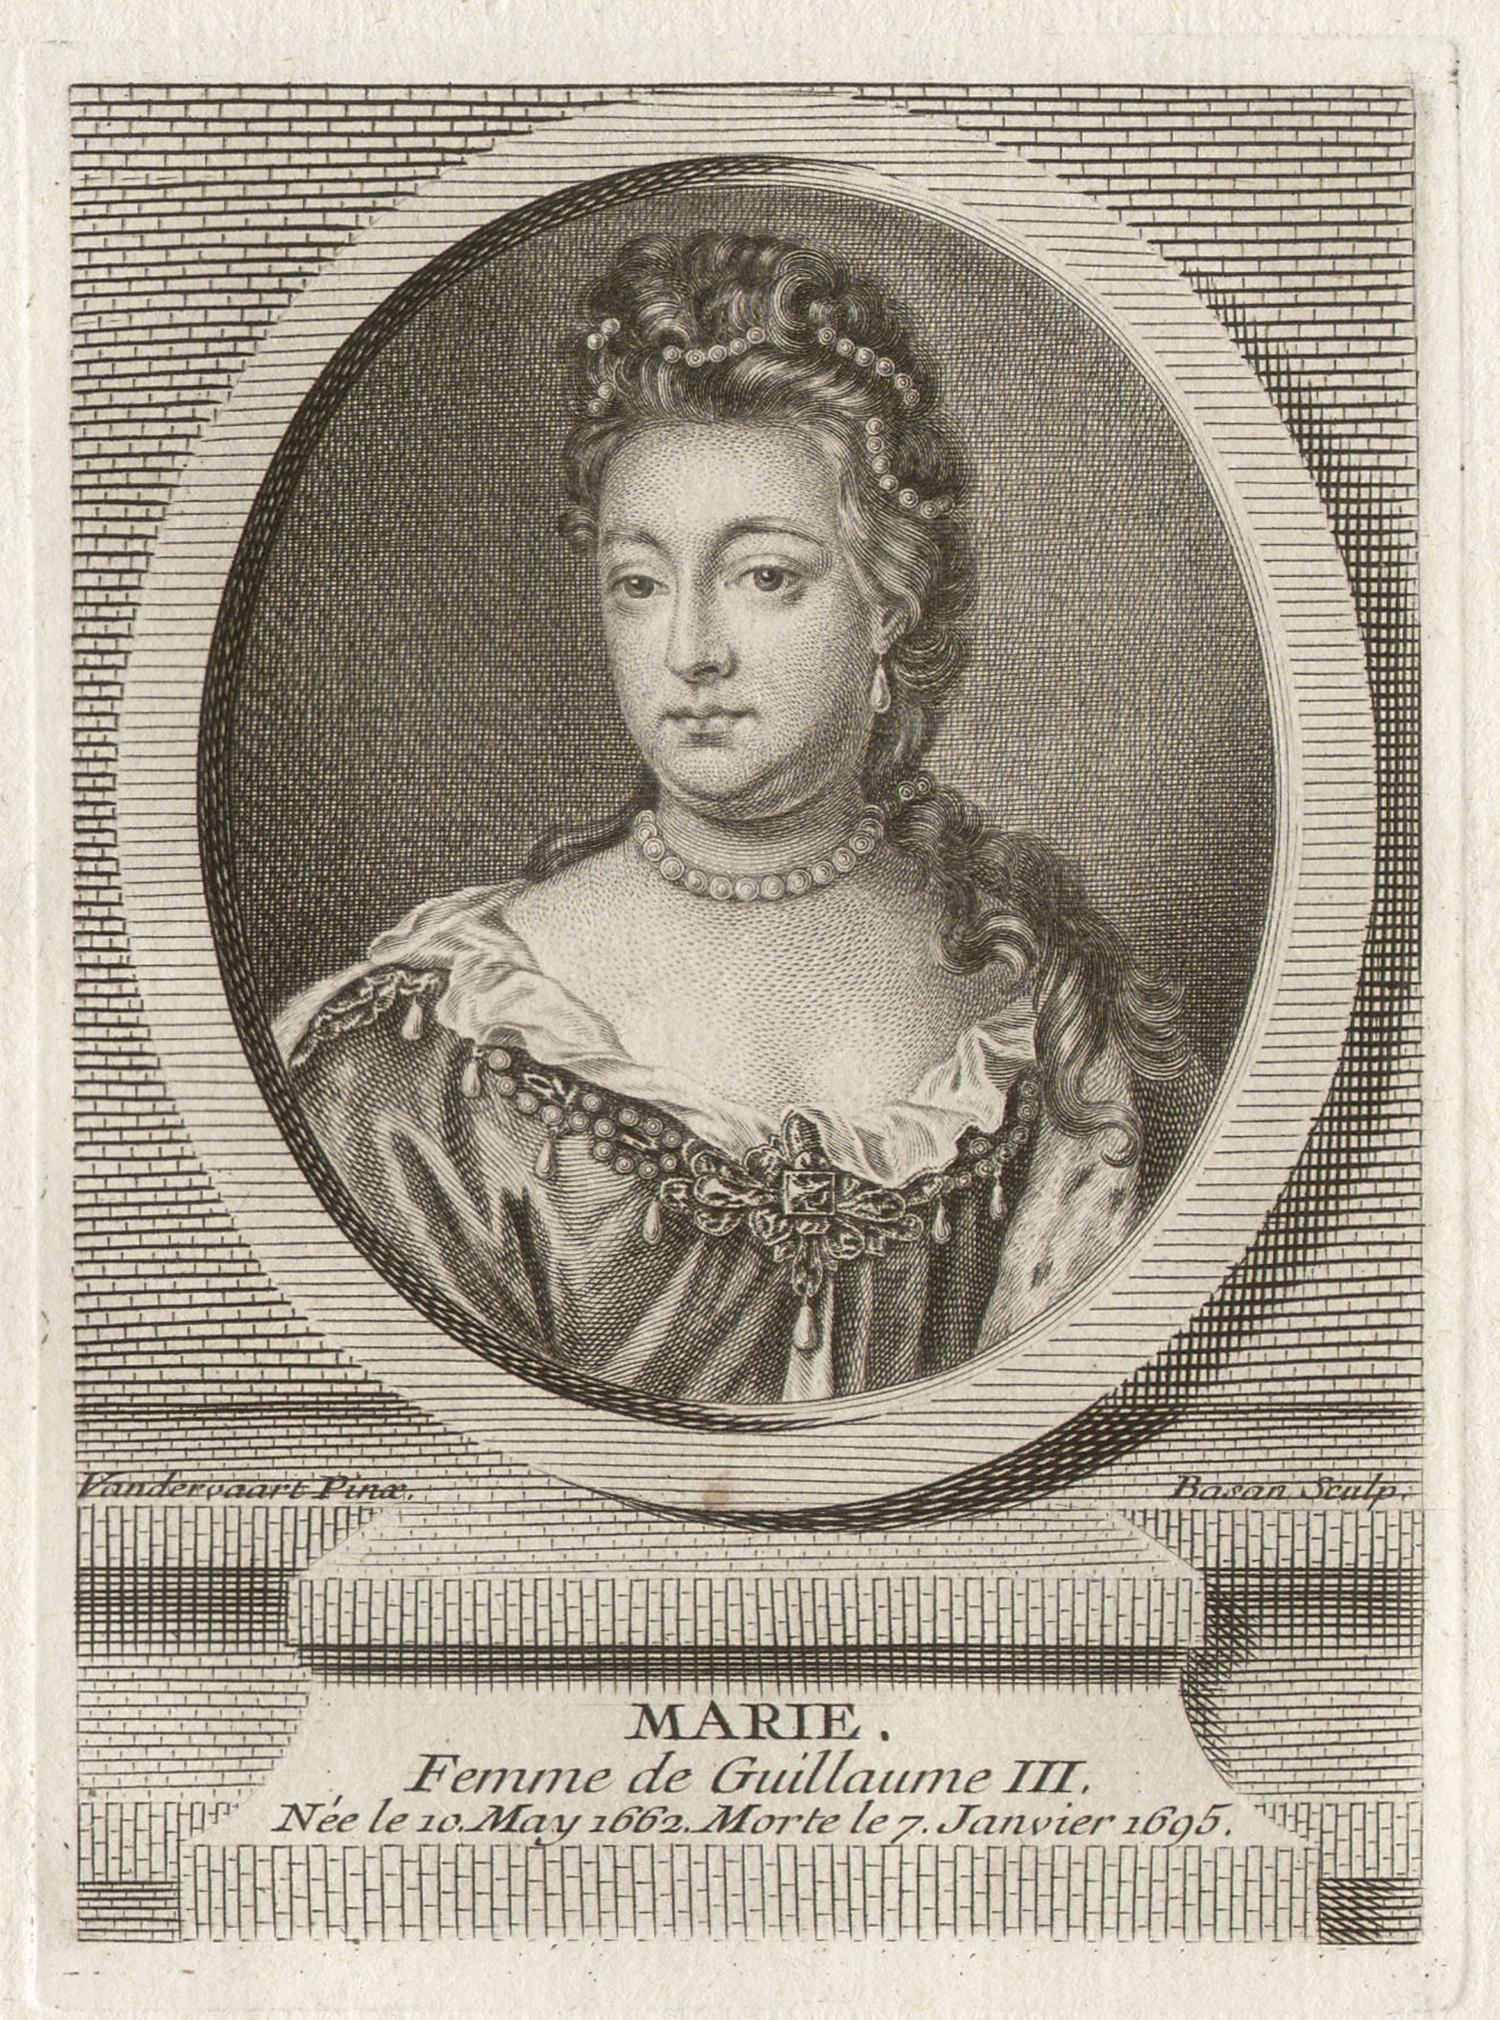 Pierre Francois Basan (1723-1797) after Van der vaart Portrait Print - Queen Mary, Queen of England, royalty portrait engraving, circa 1780